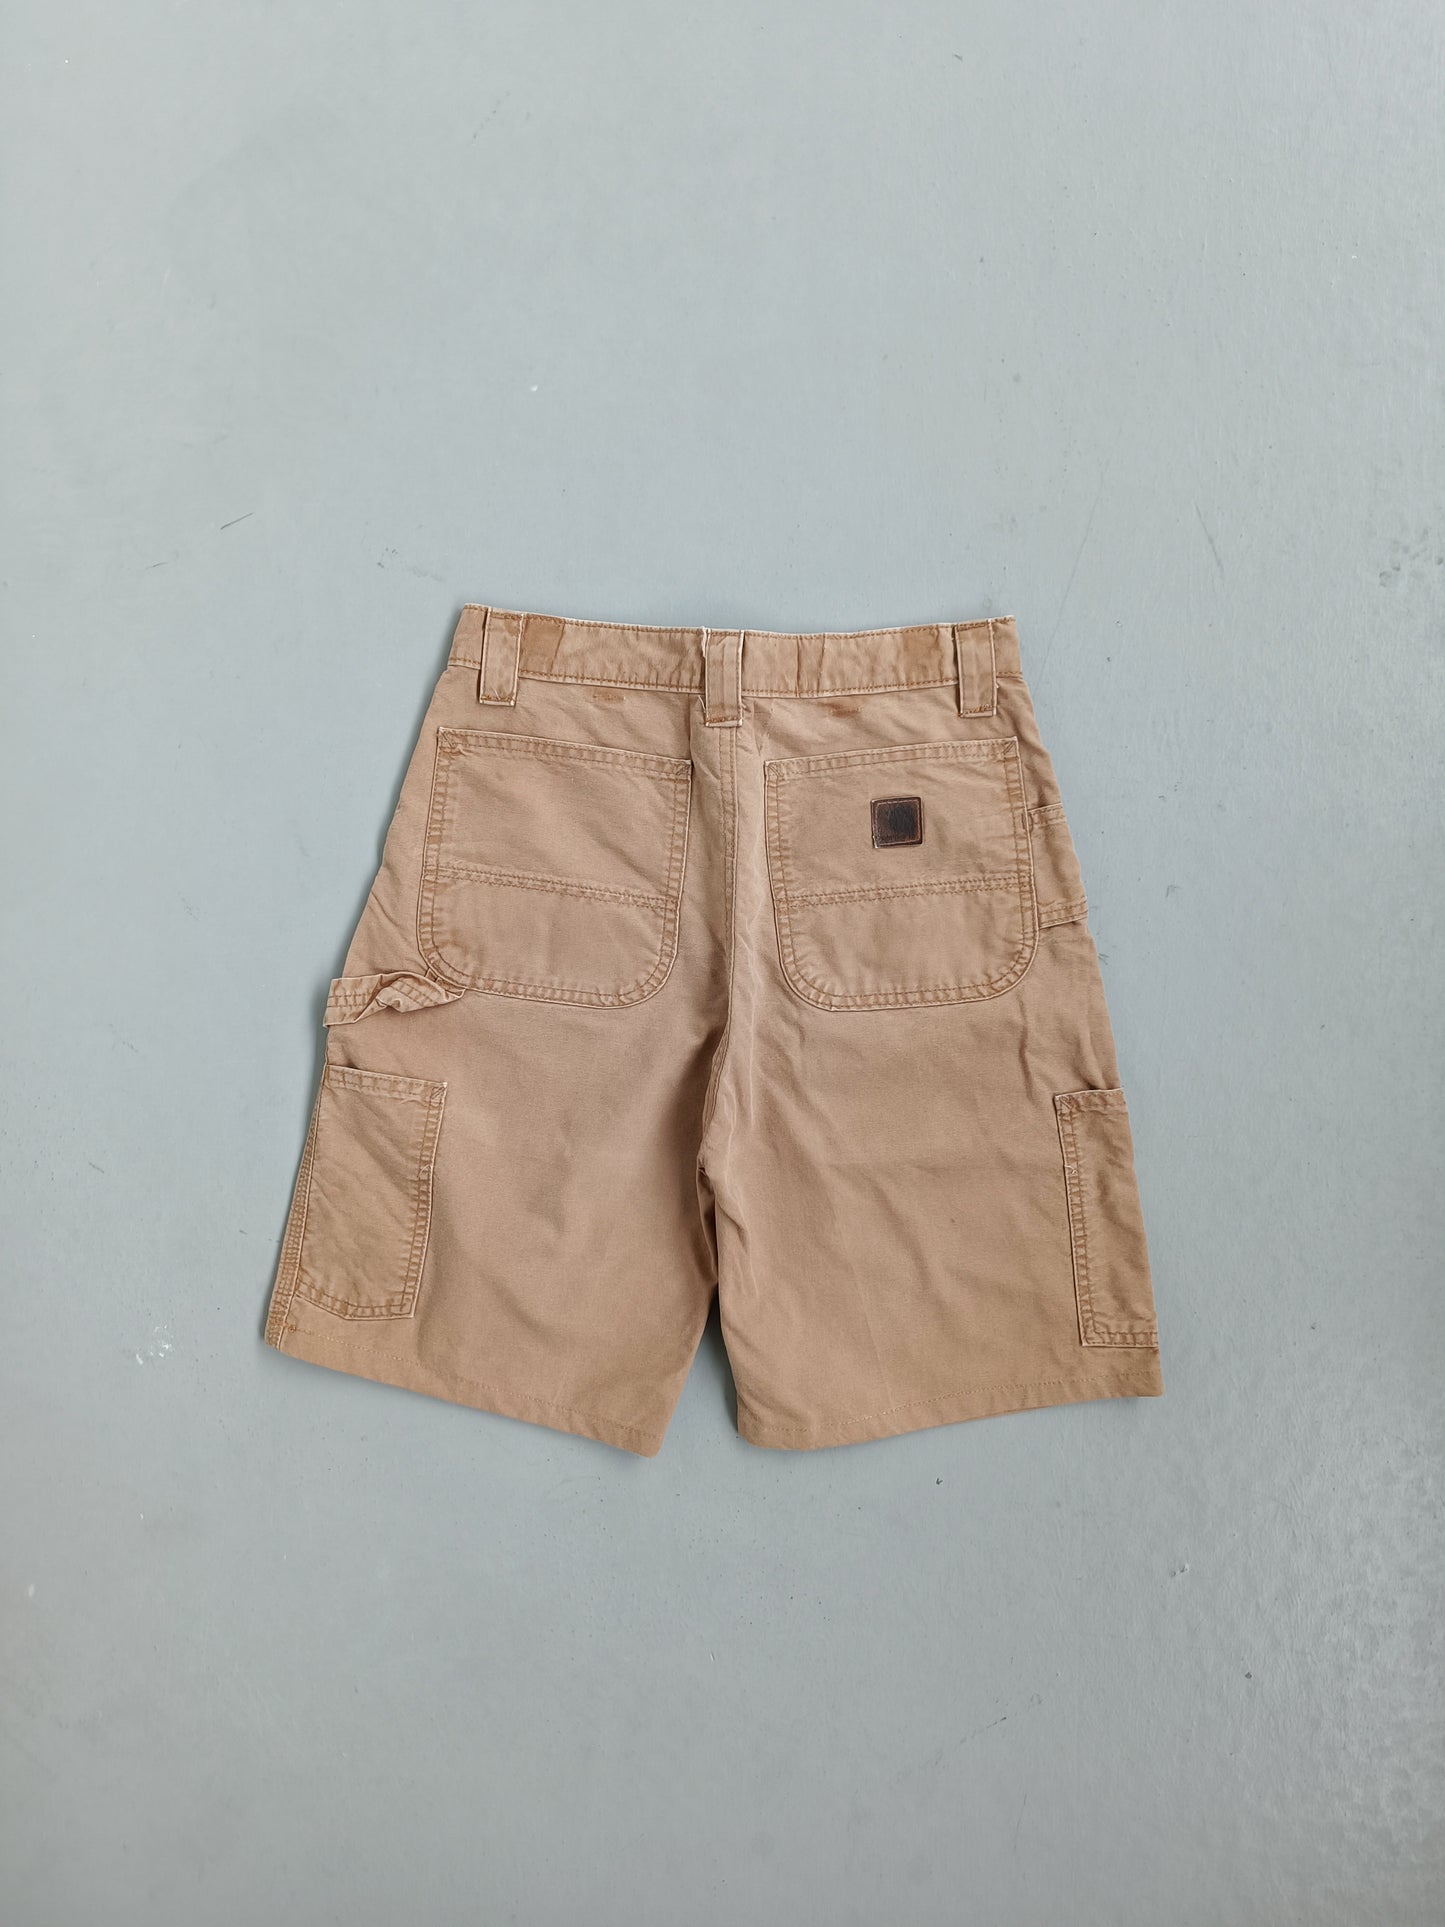 W28 Carhartt carpenter shorts